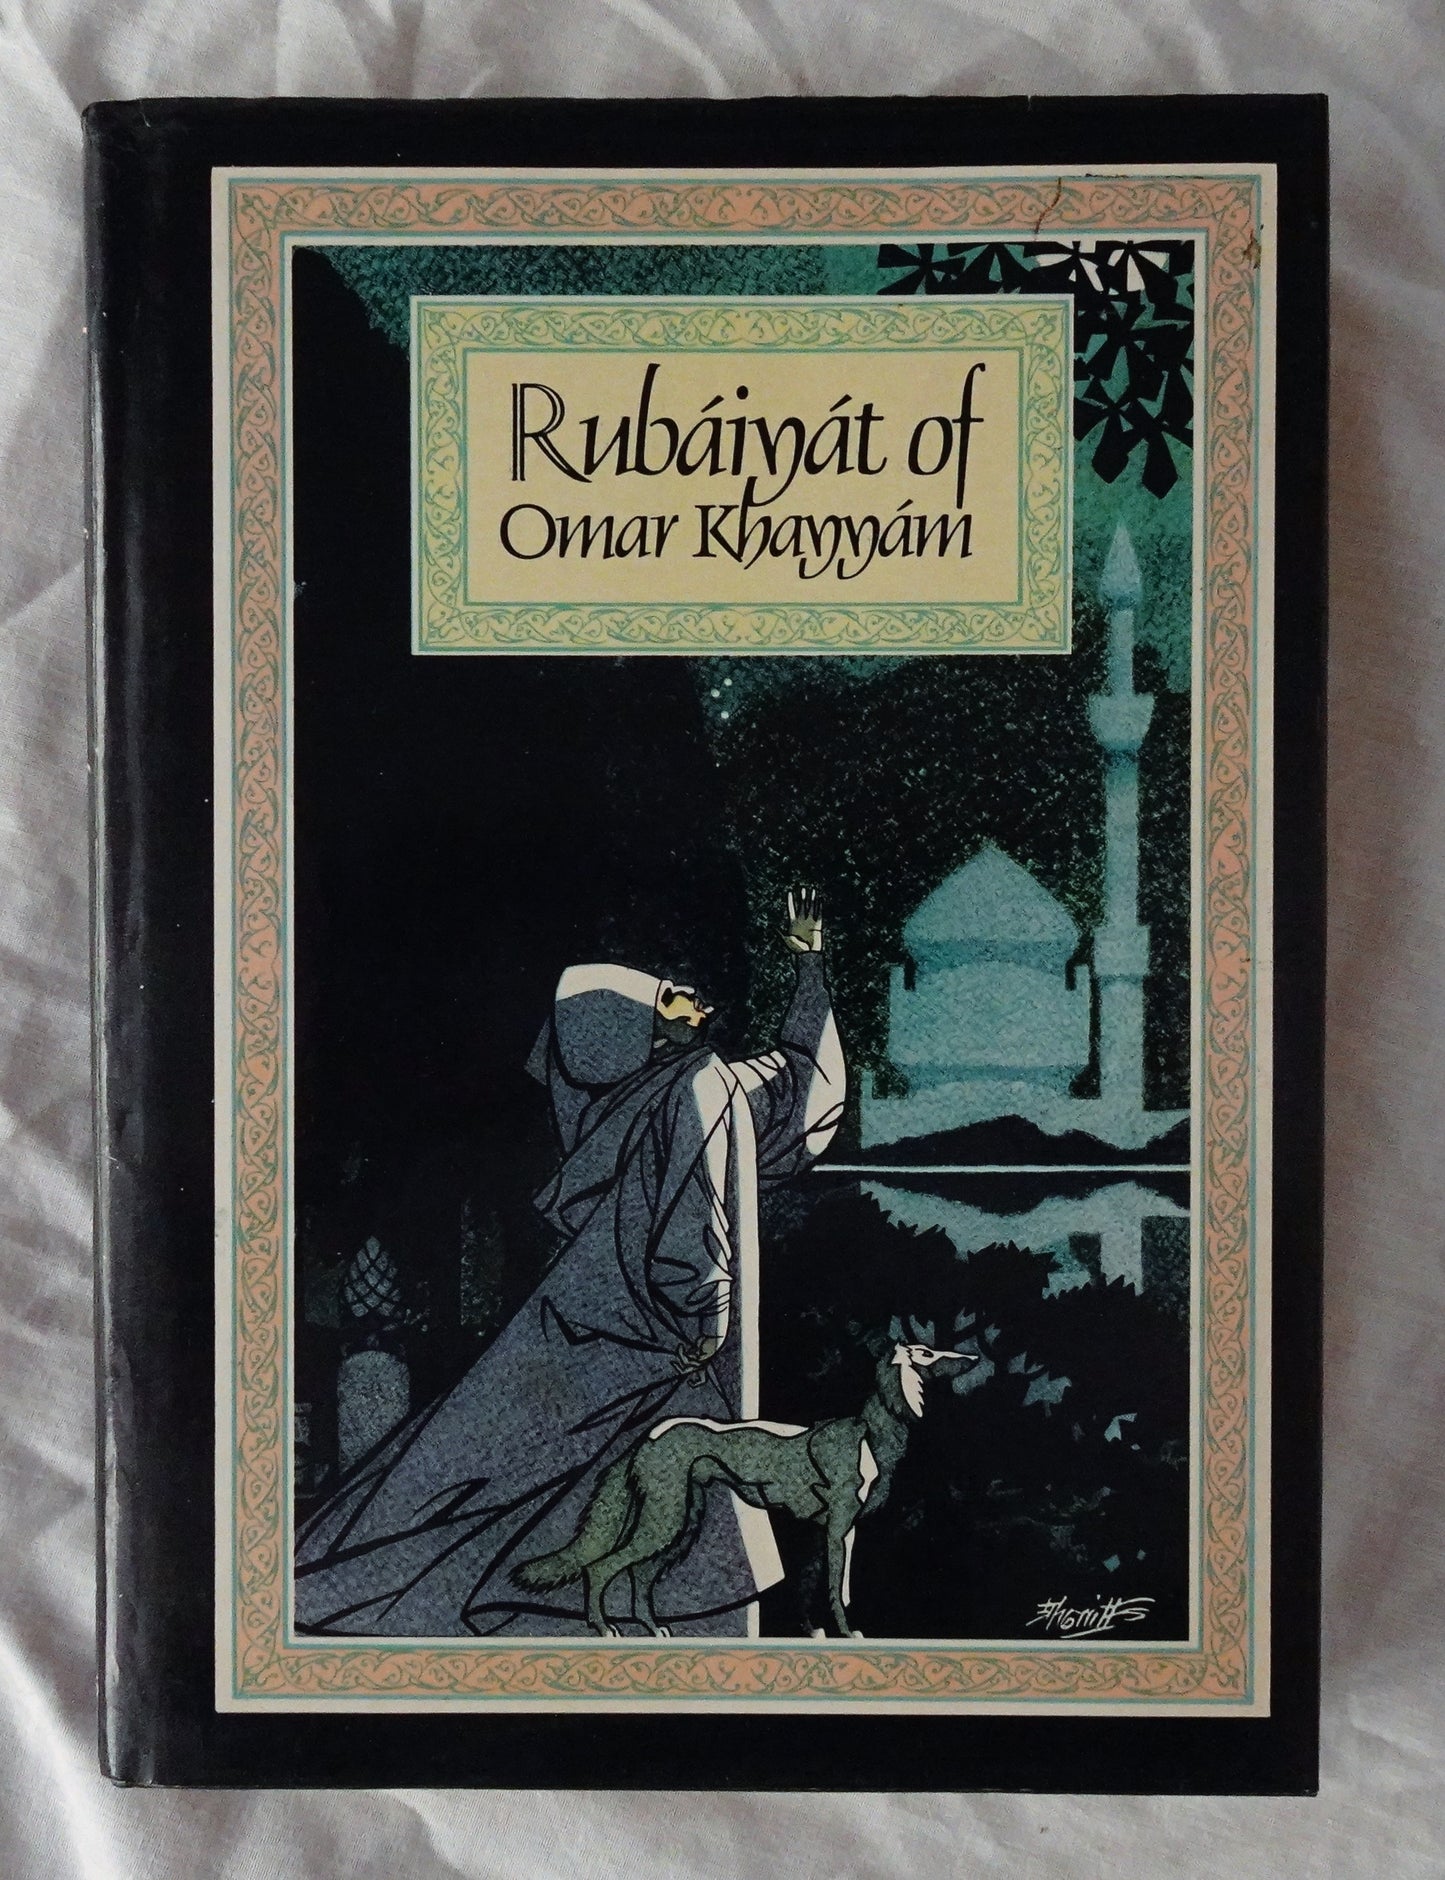 Rubaiyat of Omar Khayyam  Rendered into English verse by Edward Fitzgerald  Edited by George F. Maine  Illustrated by Robert Stewart Sherriffs